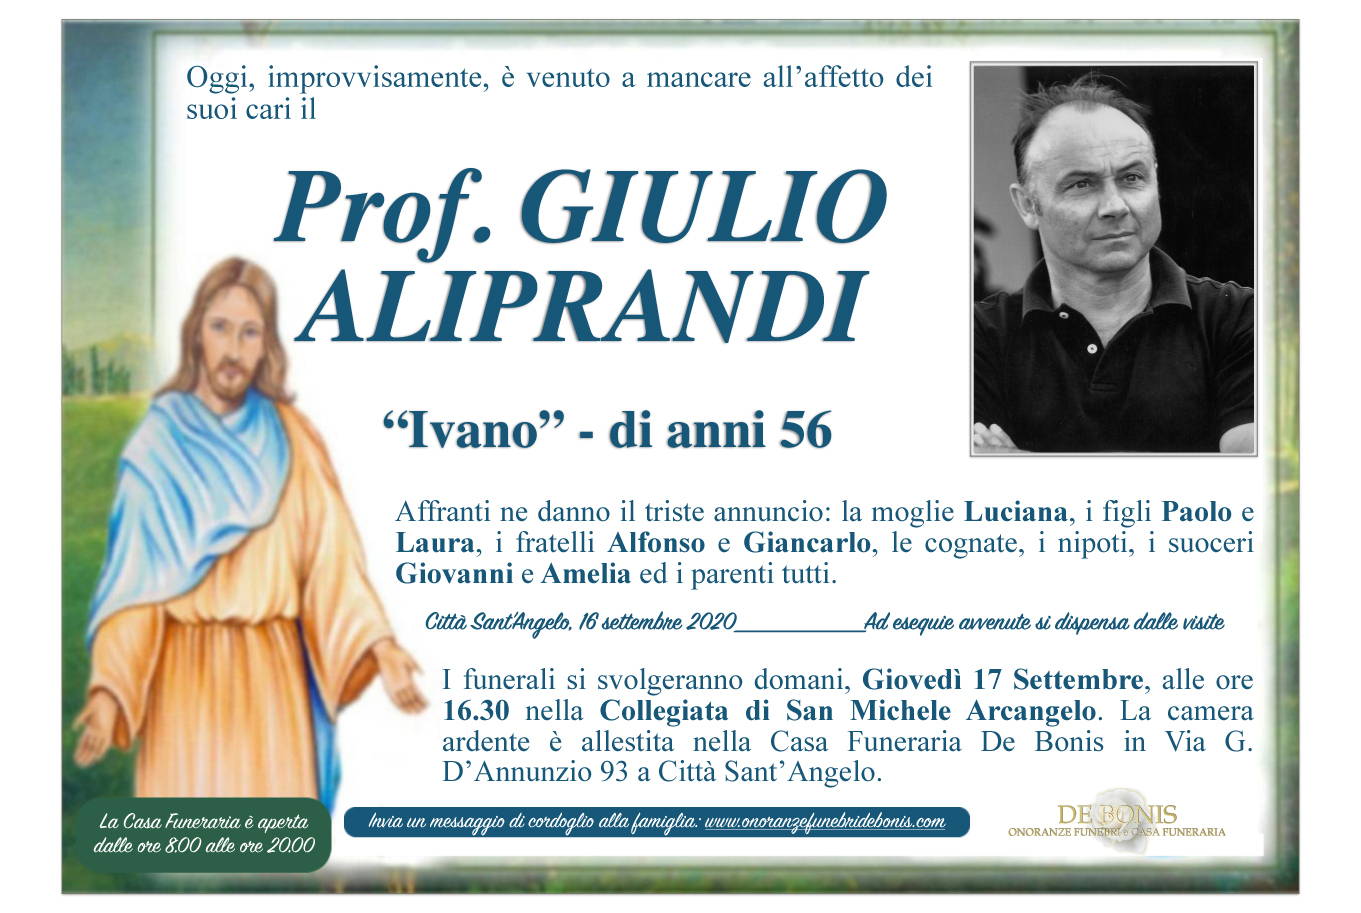 Giulio "Ivano" Aliprandi